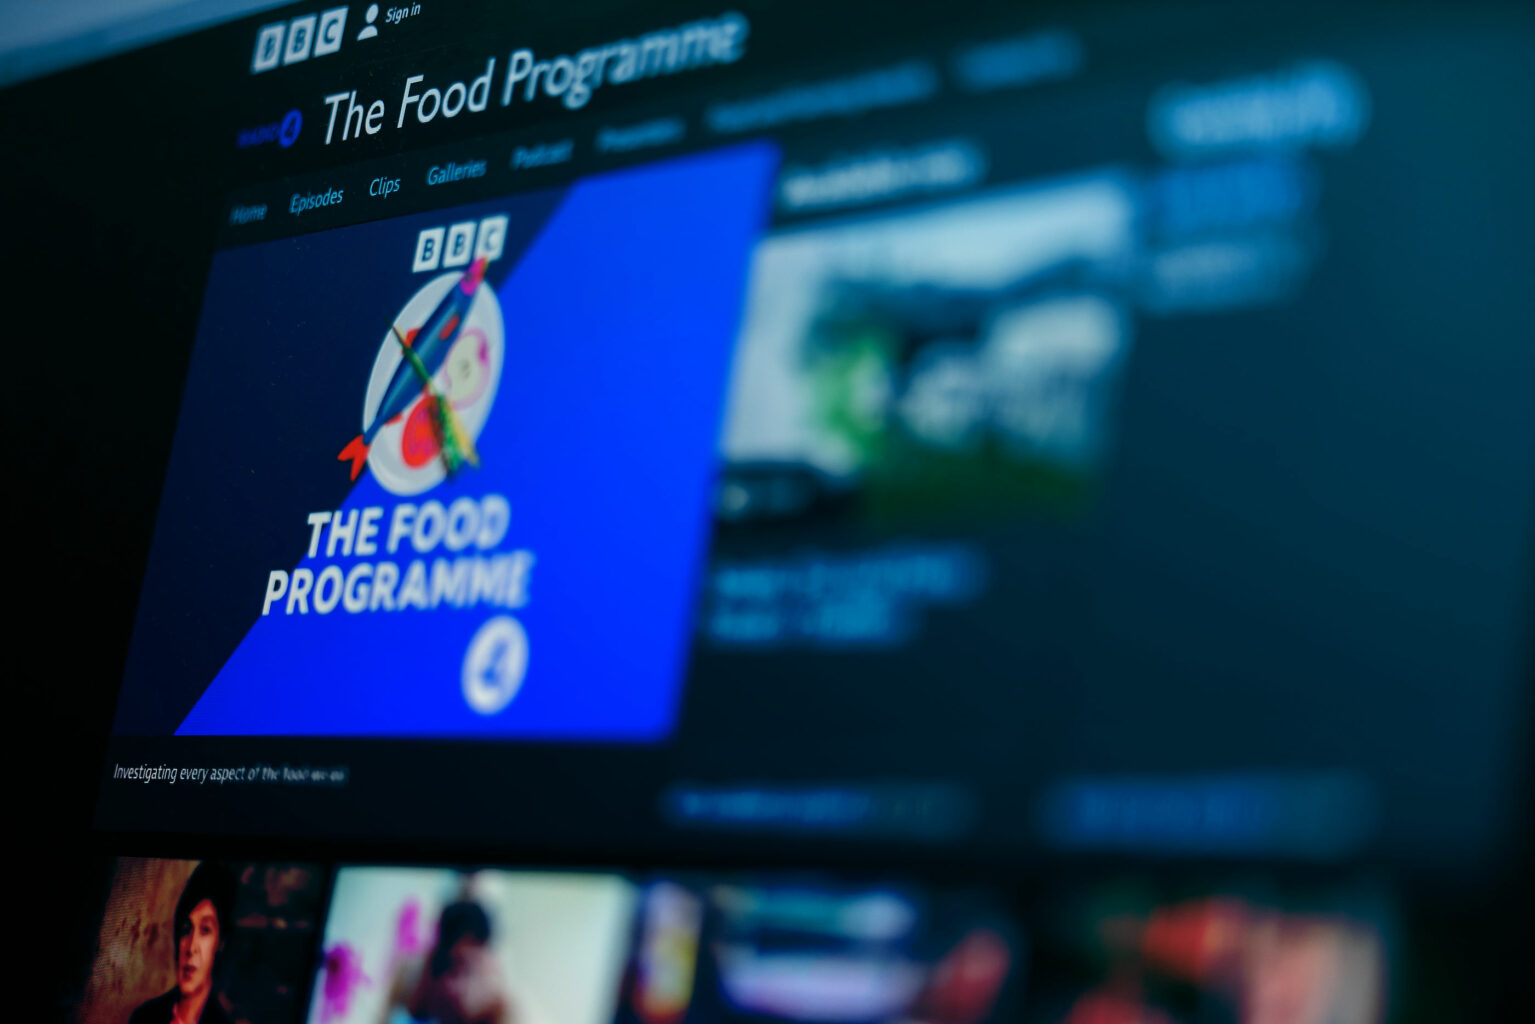 NEWS BBC Radio 4 "The Food Programme" portrayed "Bake for Ukraine" initiative!